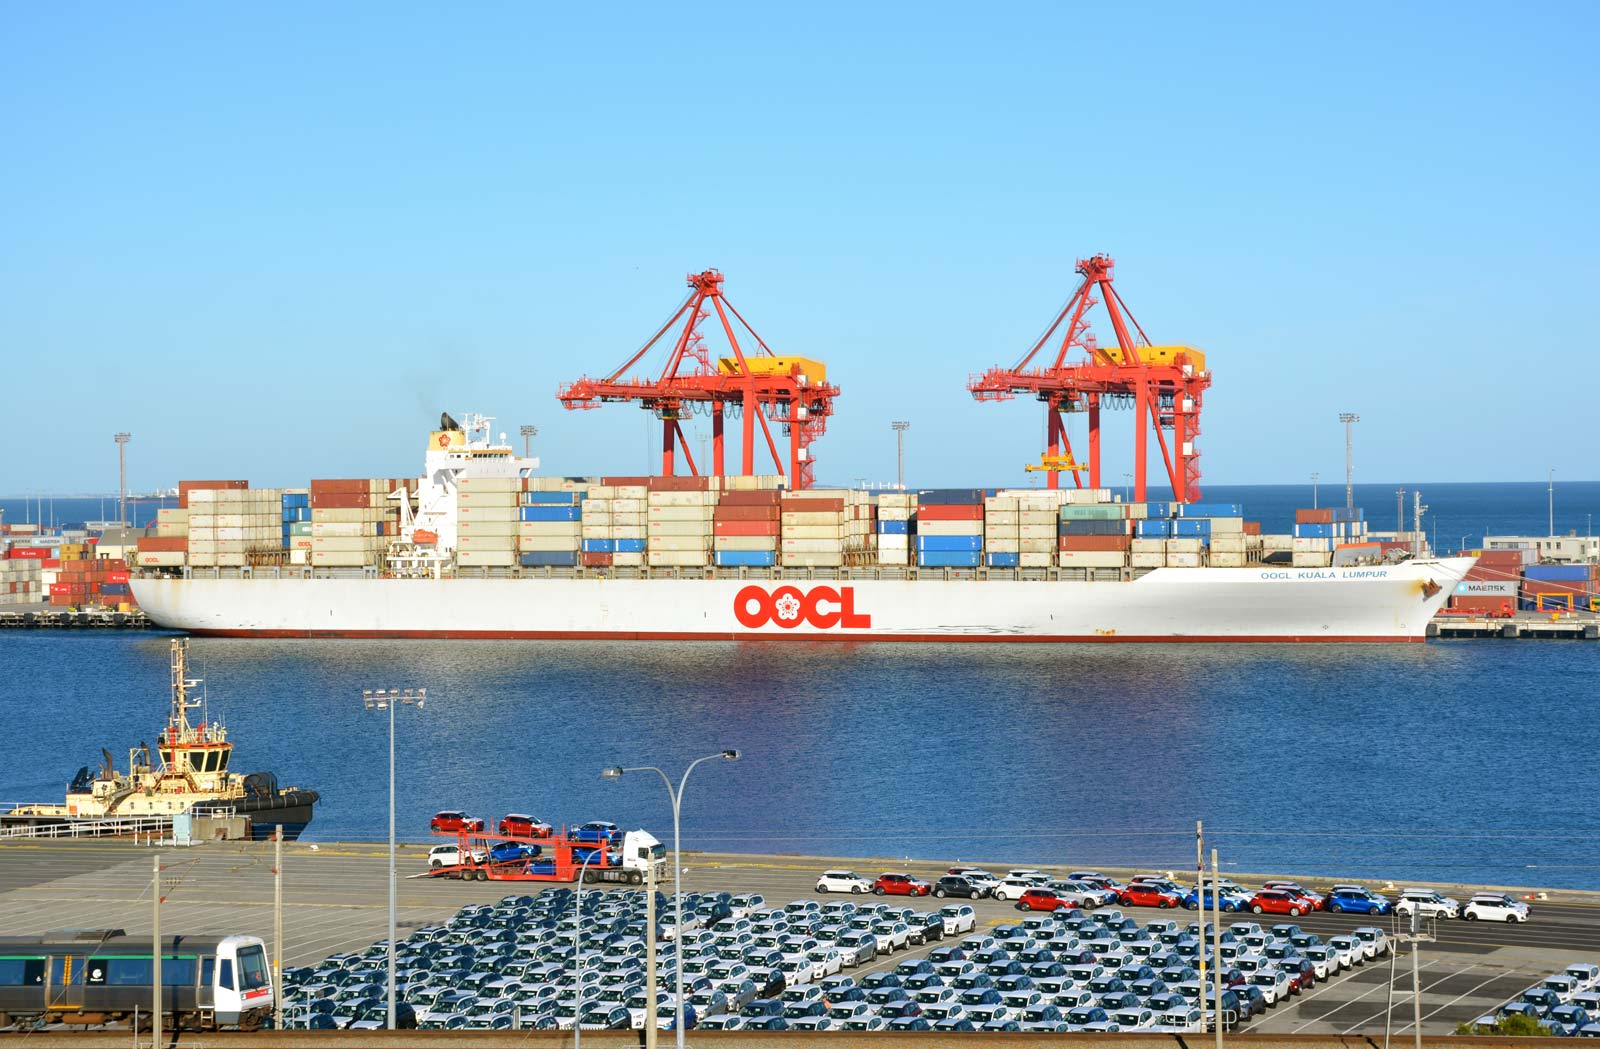 OOCL Kuala Lumpur - Ships in Fremantle Port - Fremantle Shipping News